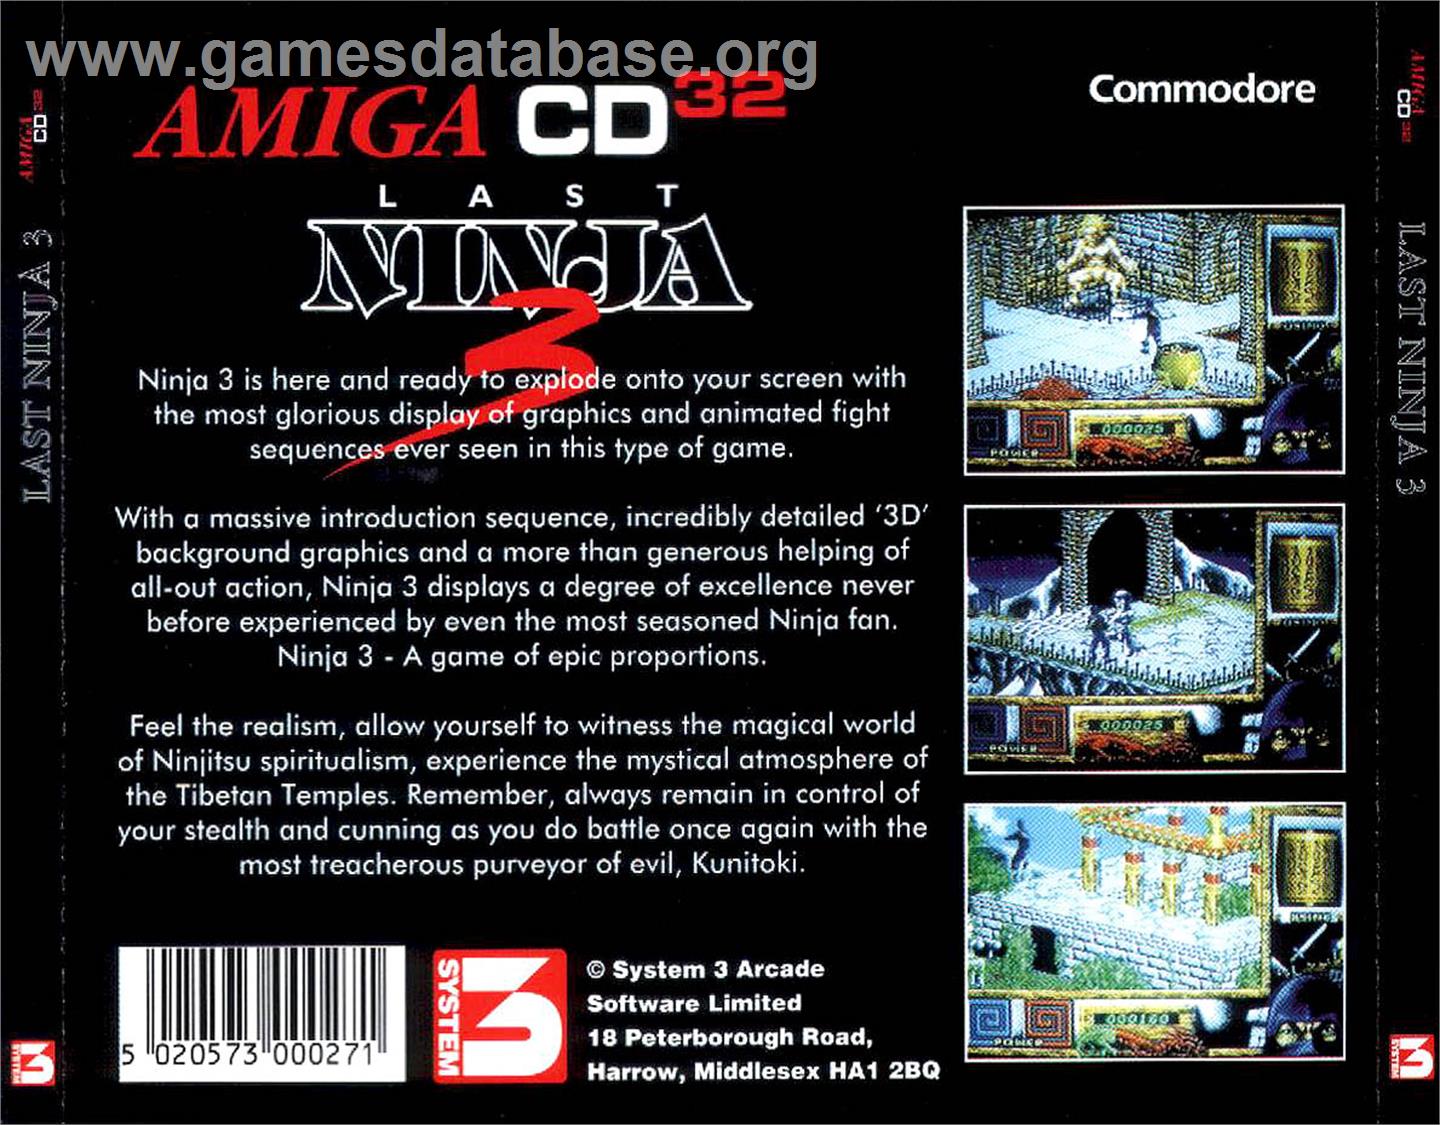 Last Ninja 3 - Commodore Amiga CD32 - Artwork - Box Back